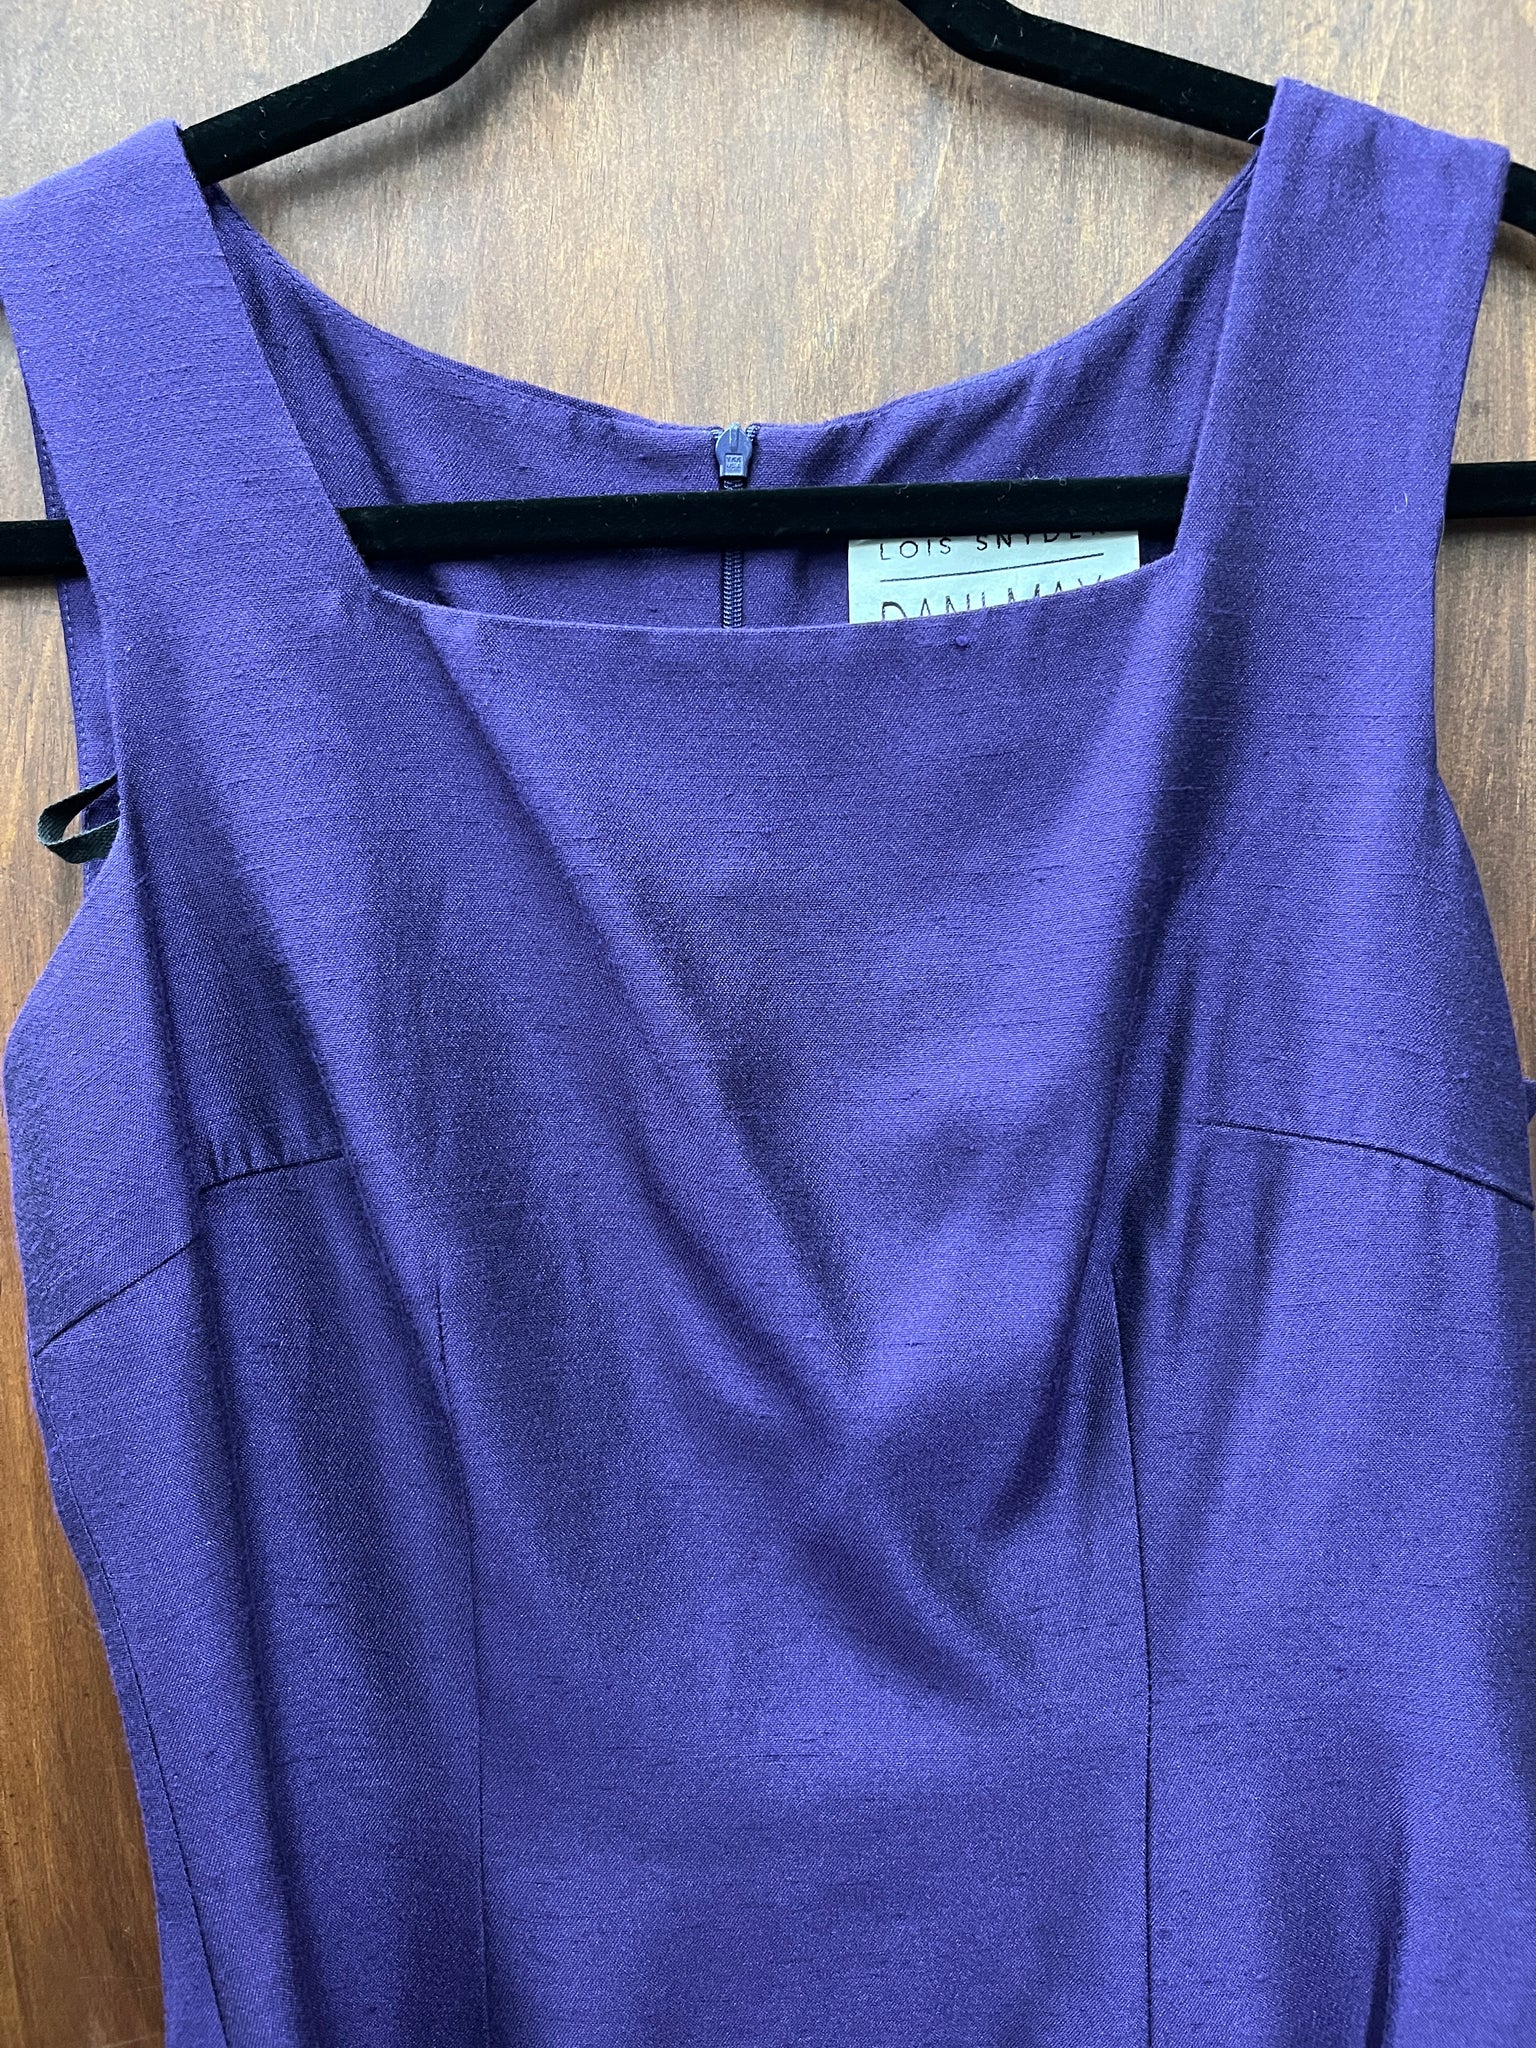 1990s DRESS-Lois Snyder Dani Max-purple